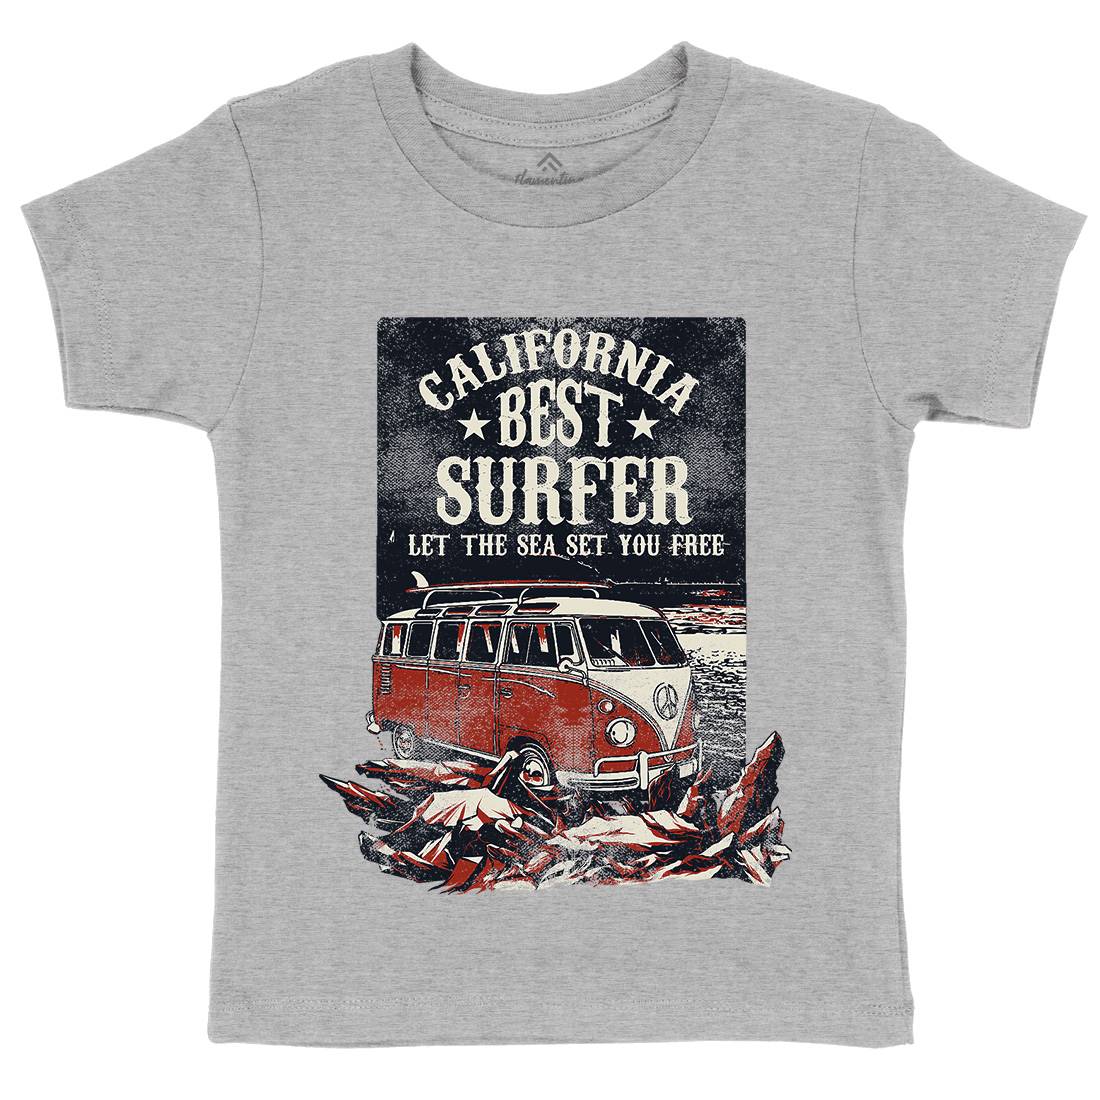 Let The Sea Set You Free Kids Organic Crew Neck T-Shirt Surf C956